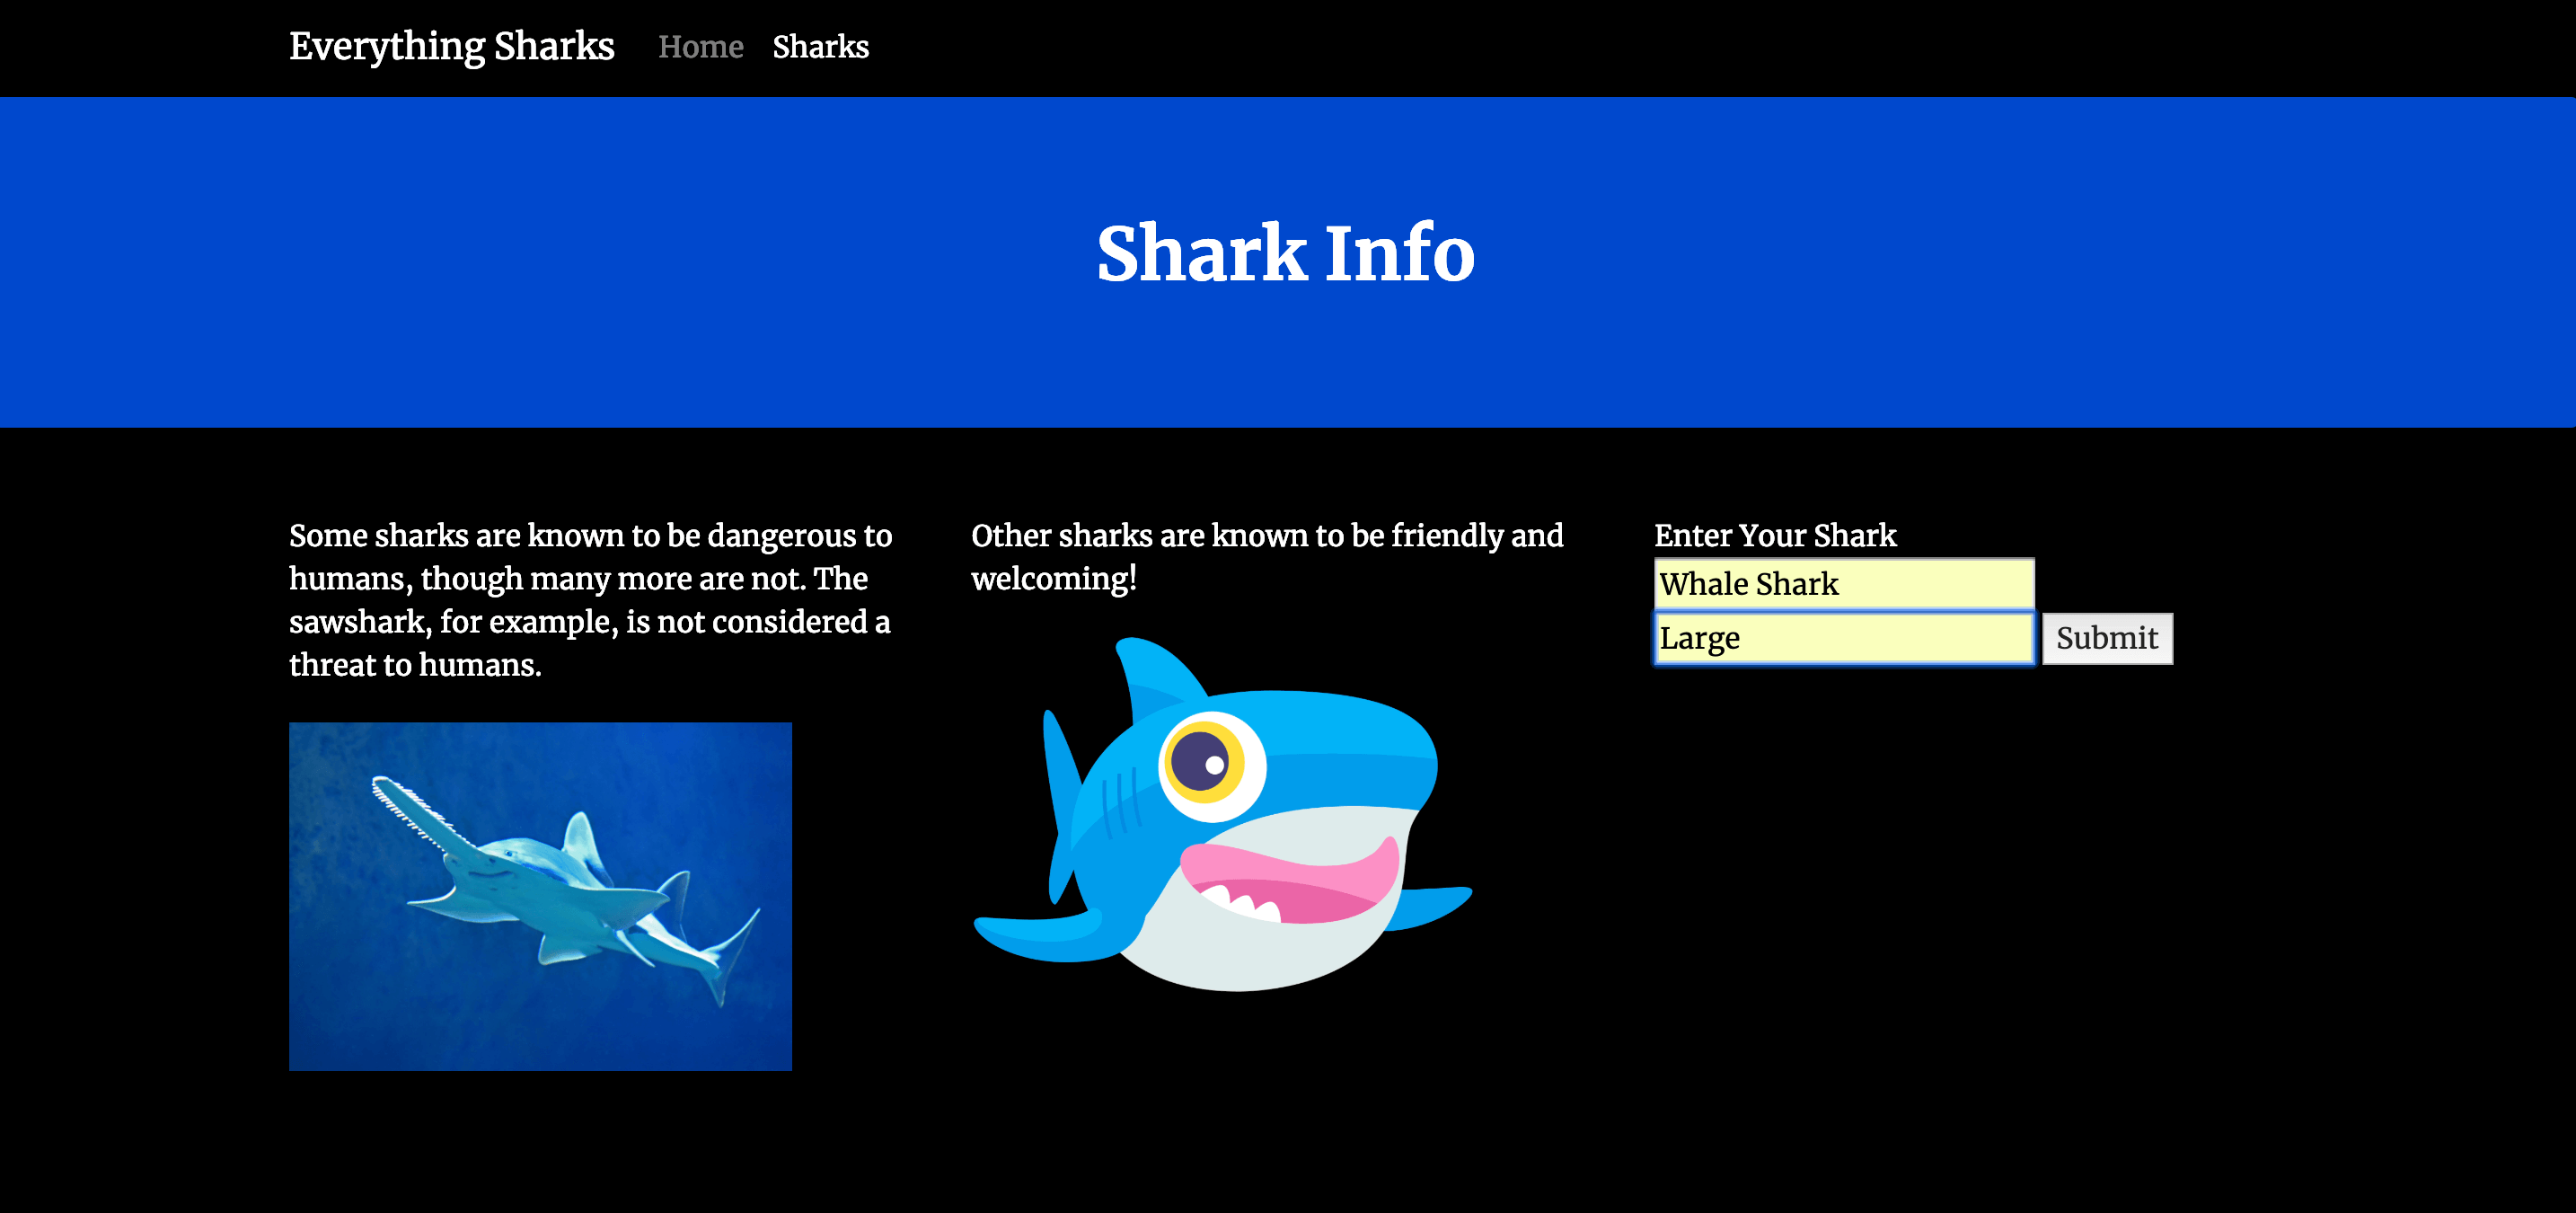 Enter New Shark